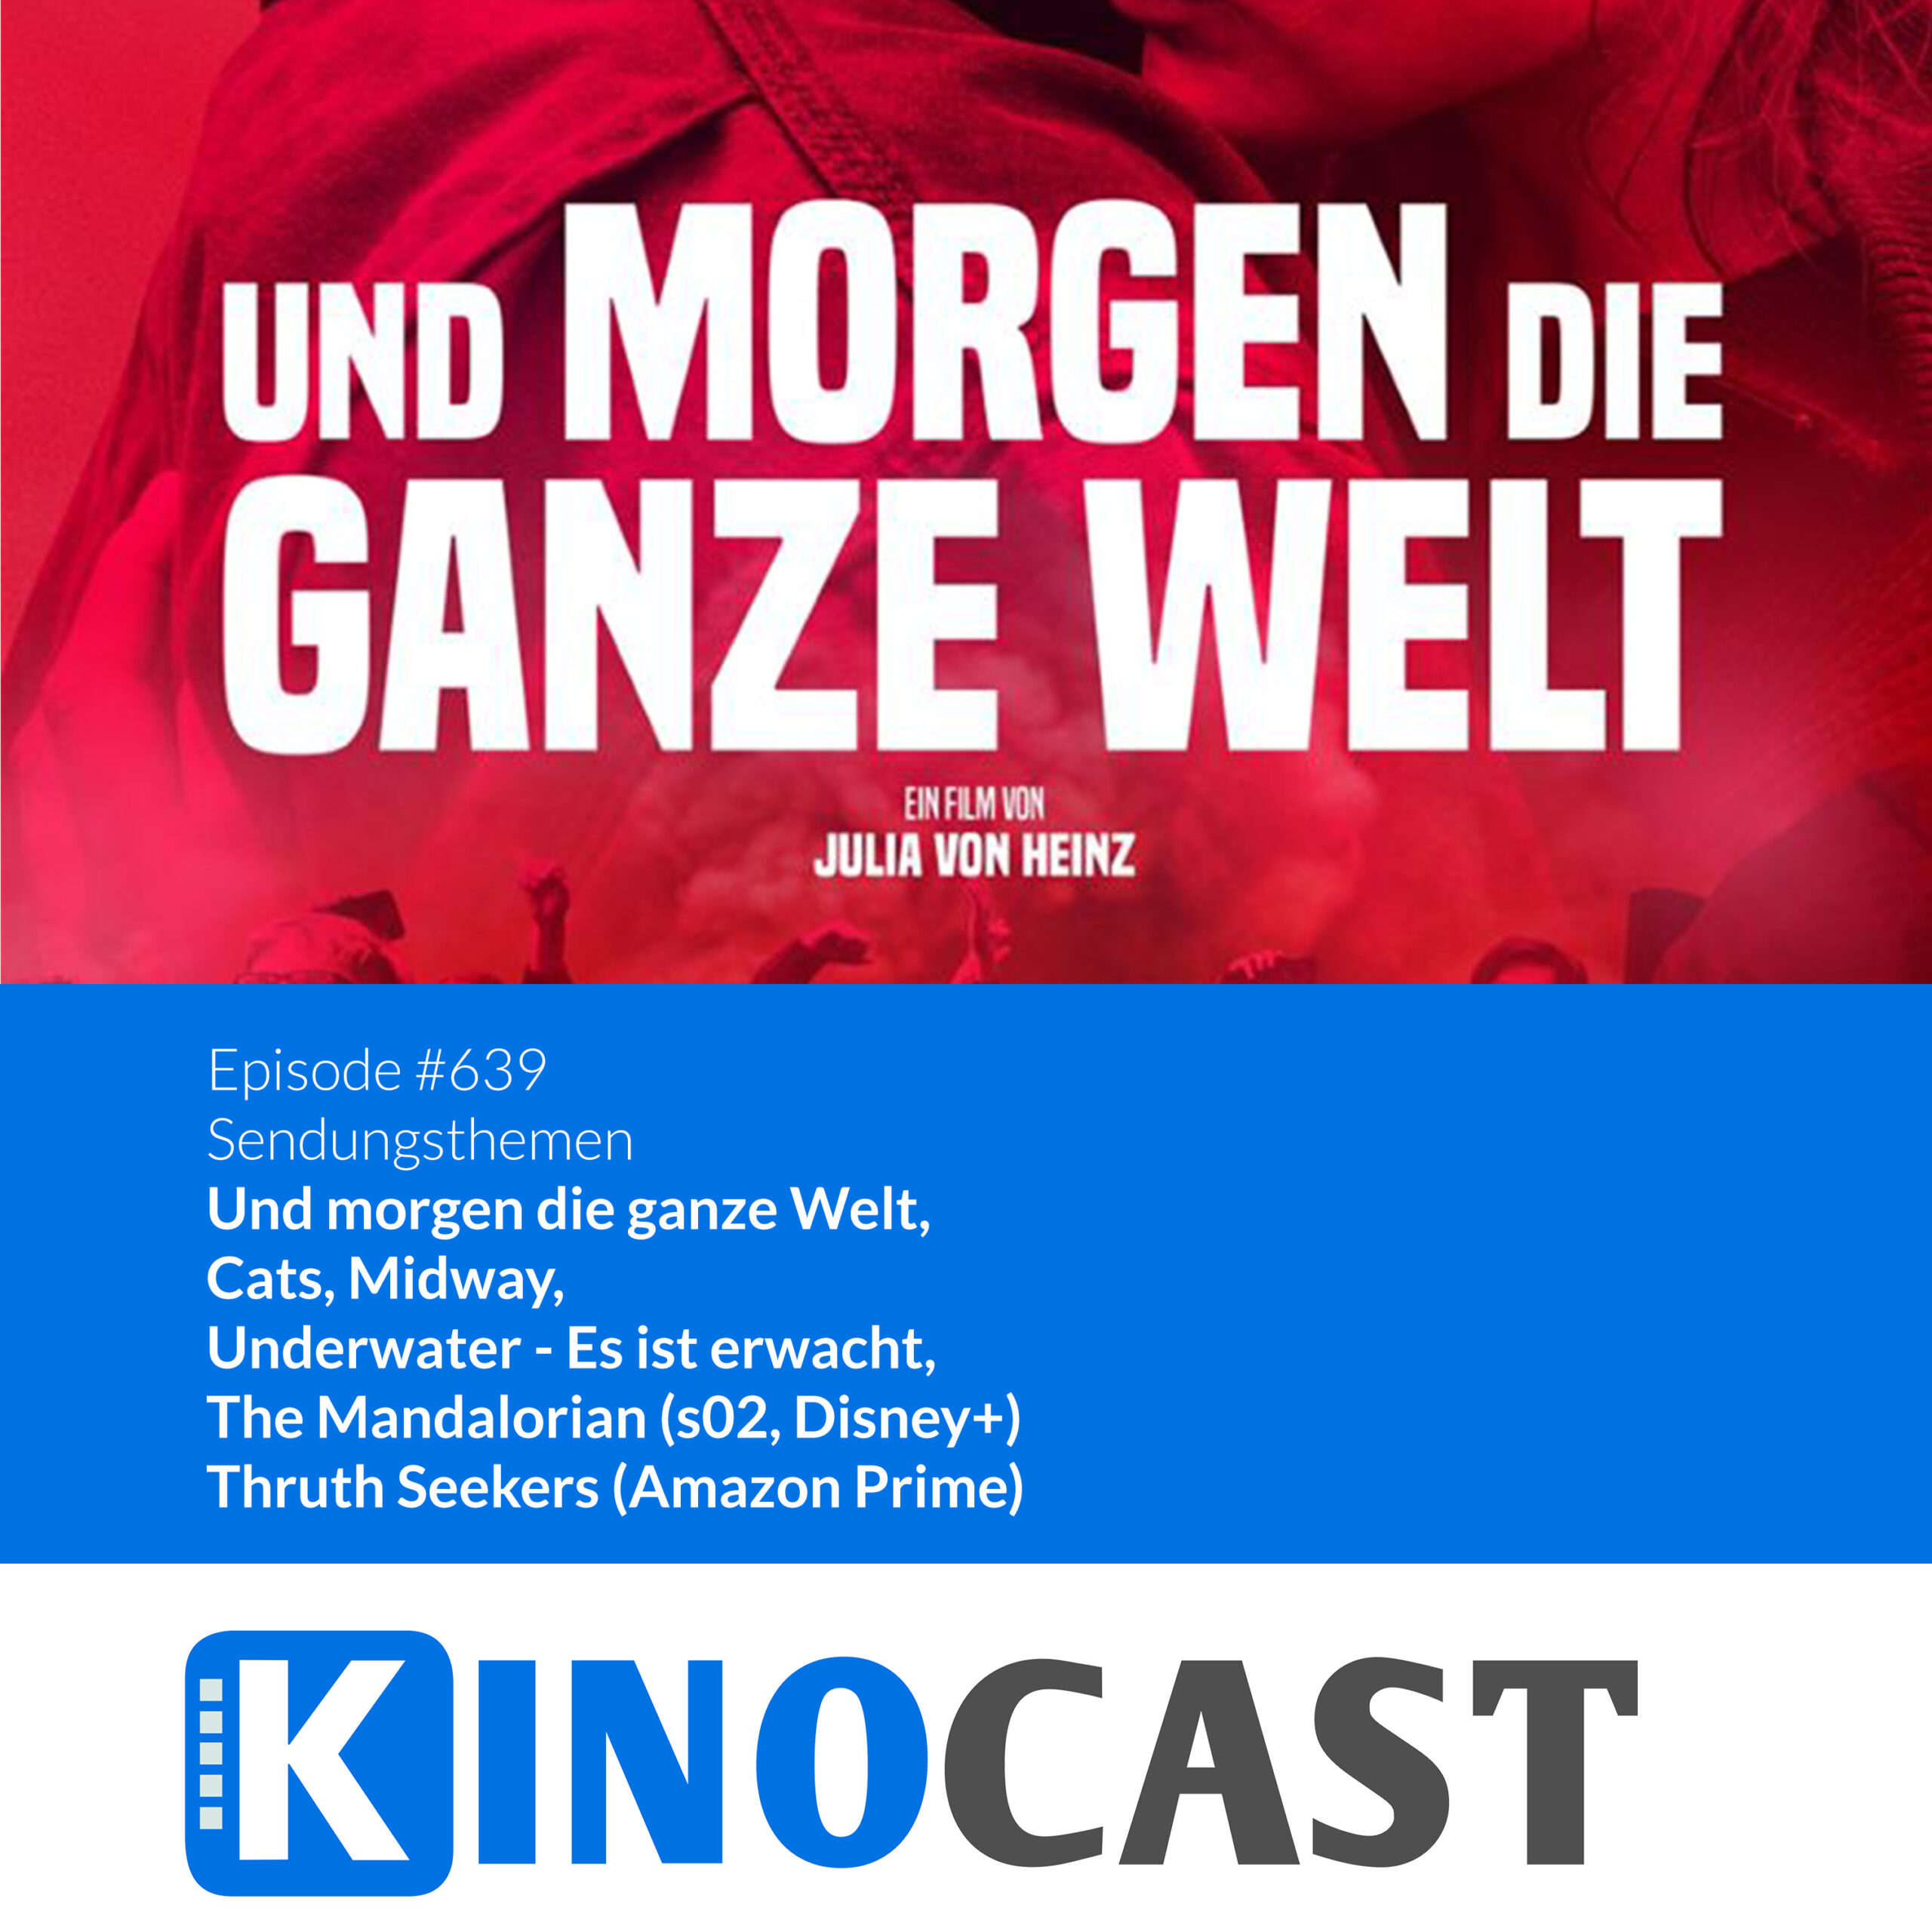 Kinocast Der Podcast über Kinofilme Sneak Preview Filme Serien Heimkino Streaming Games